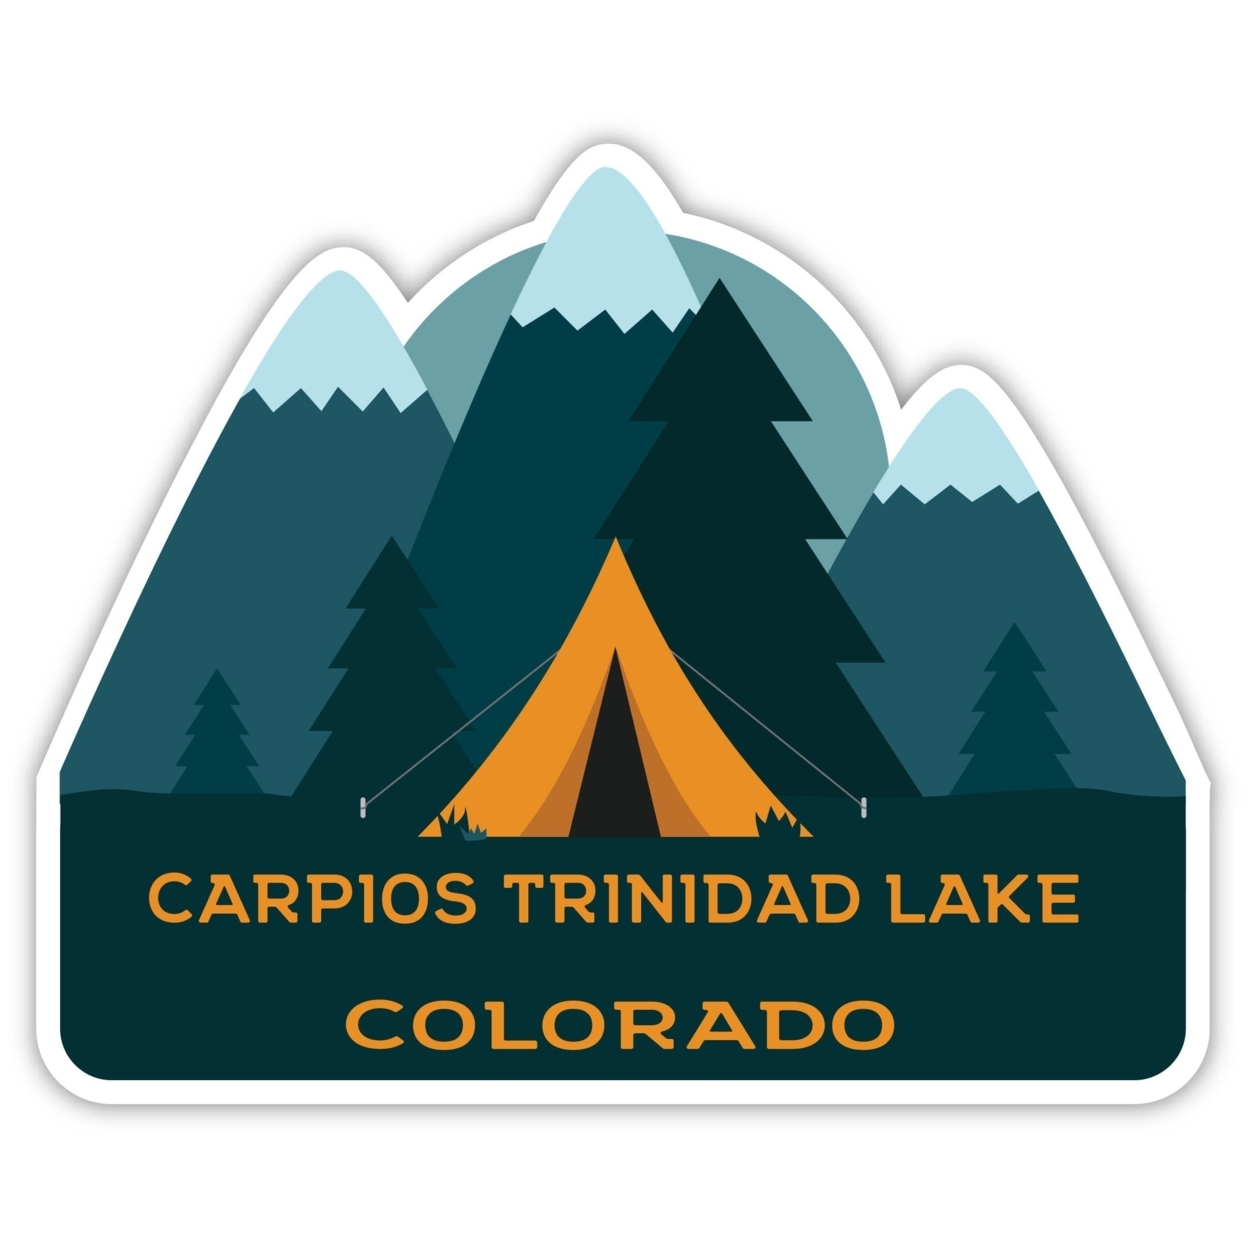 Carpios Trinidad Lake Colorado Souvenir Decorative Stickers (Choose Theme And Size) - 4-Pack, 6-Inch, Tent